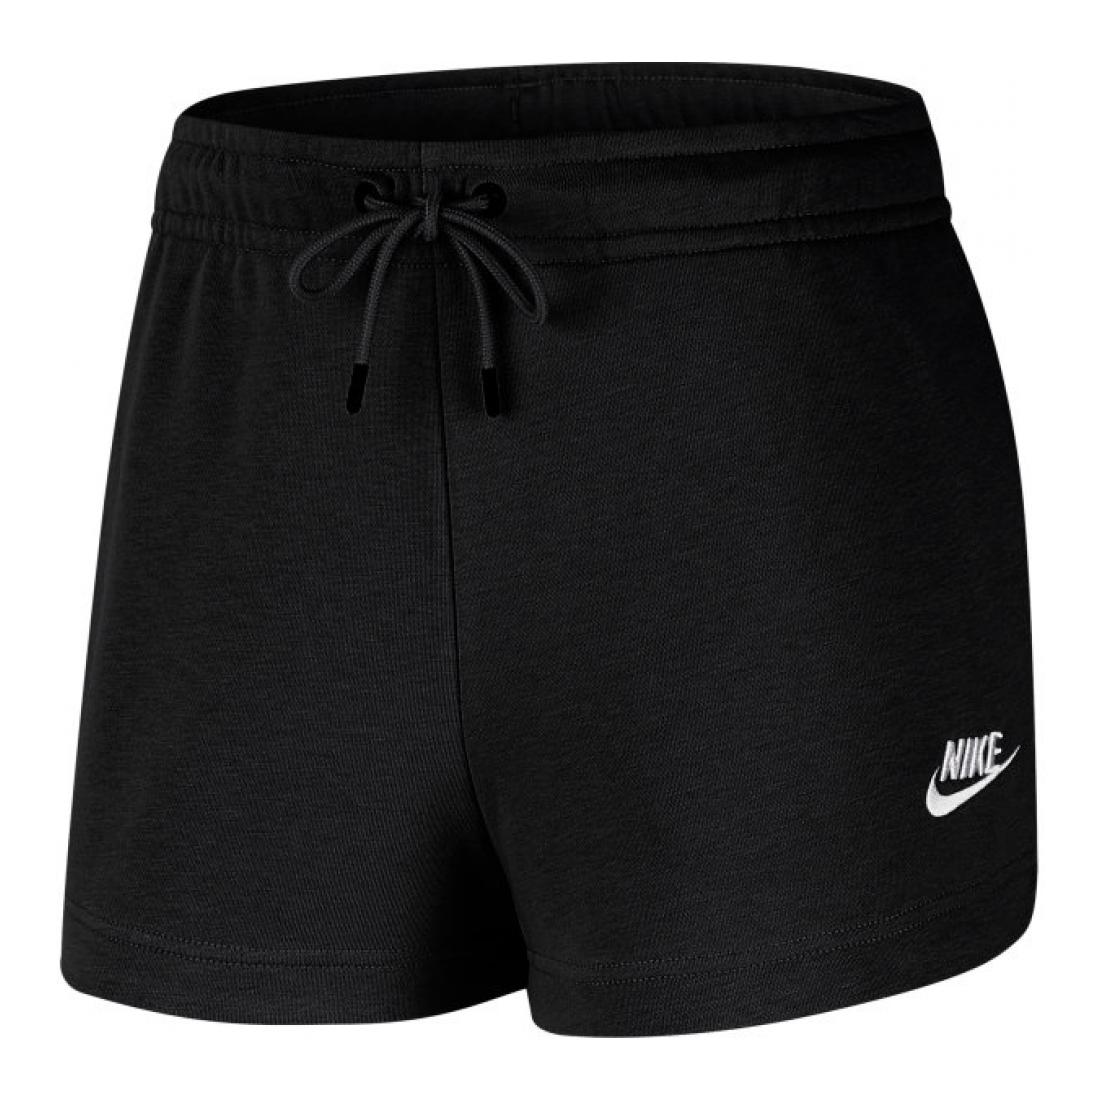 Nike Bermuda/Shorts Damen